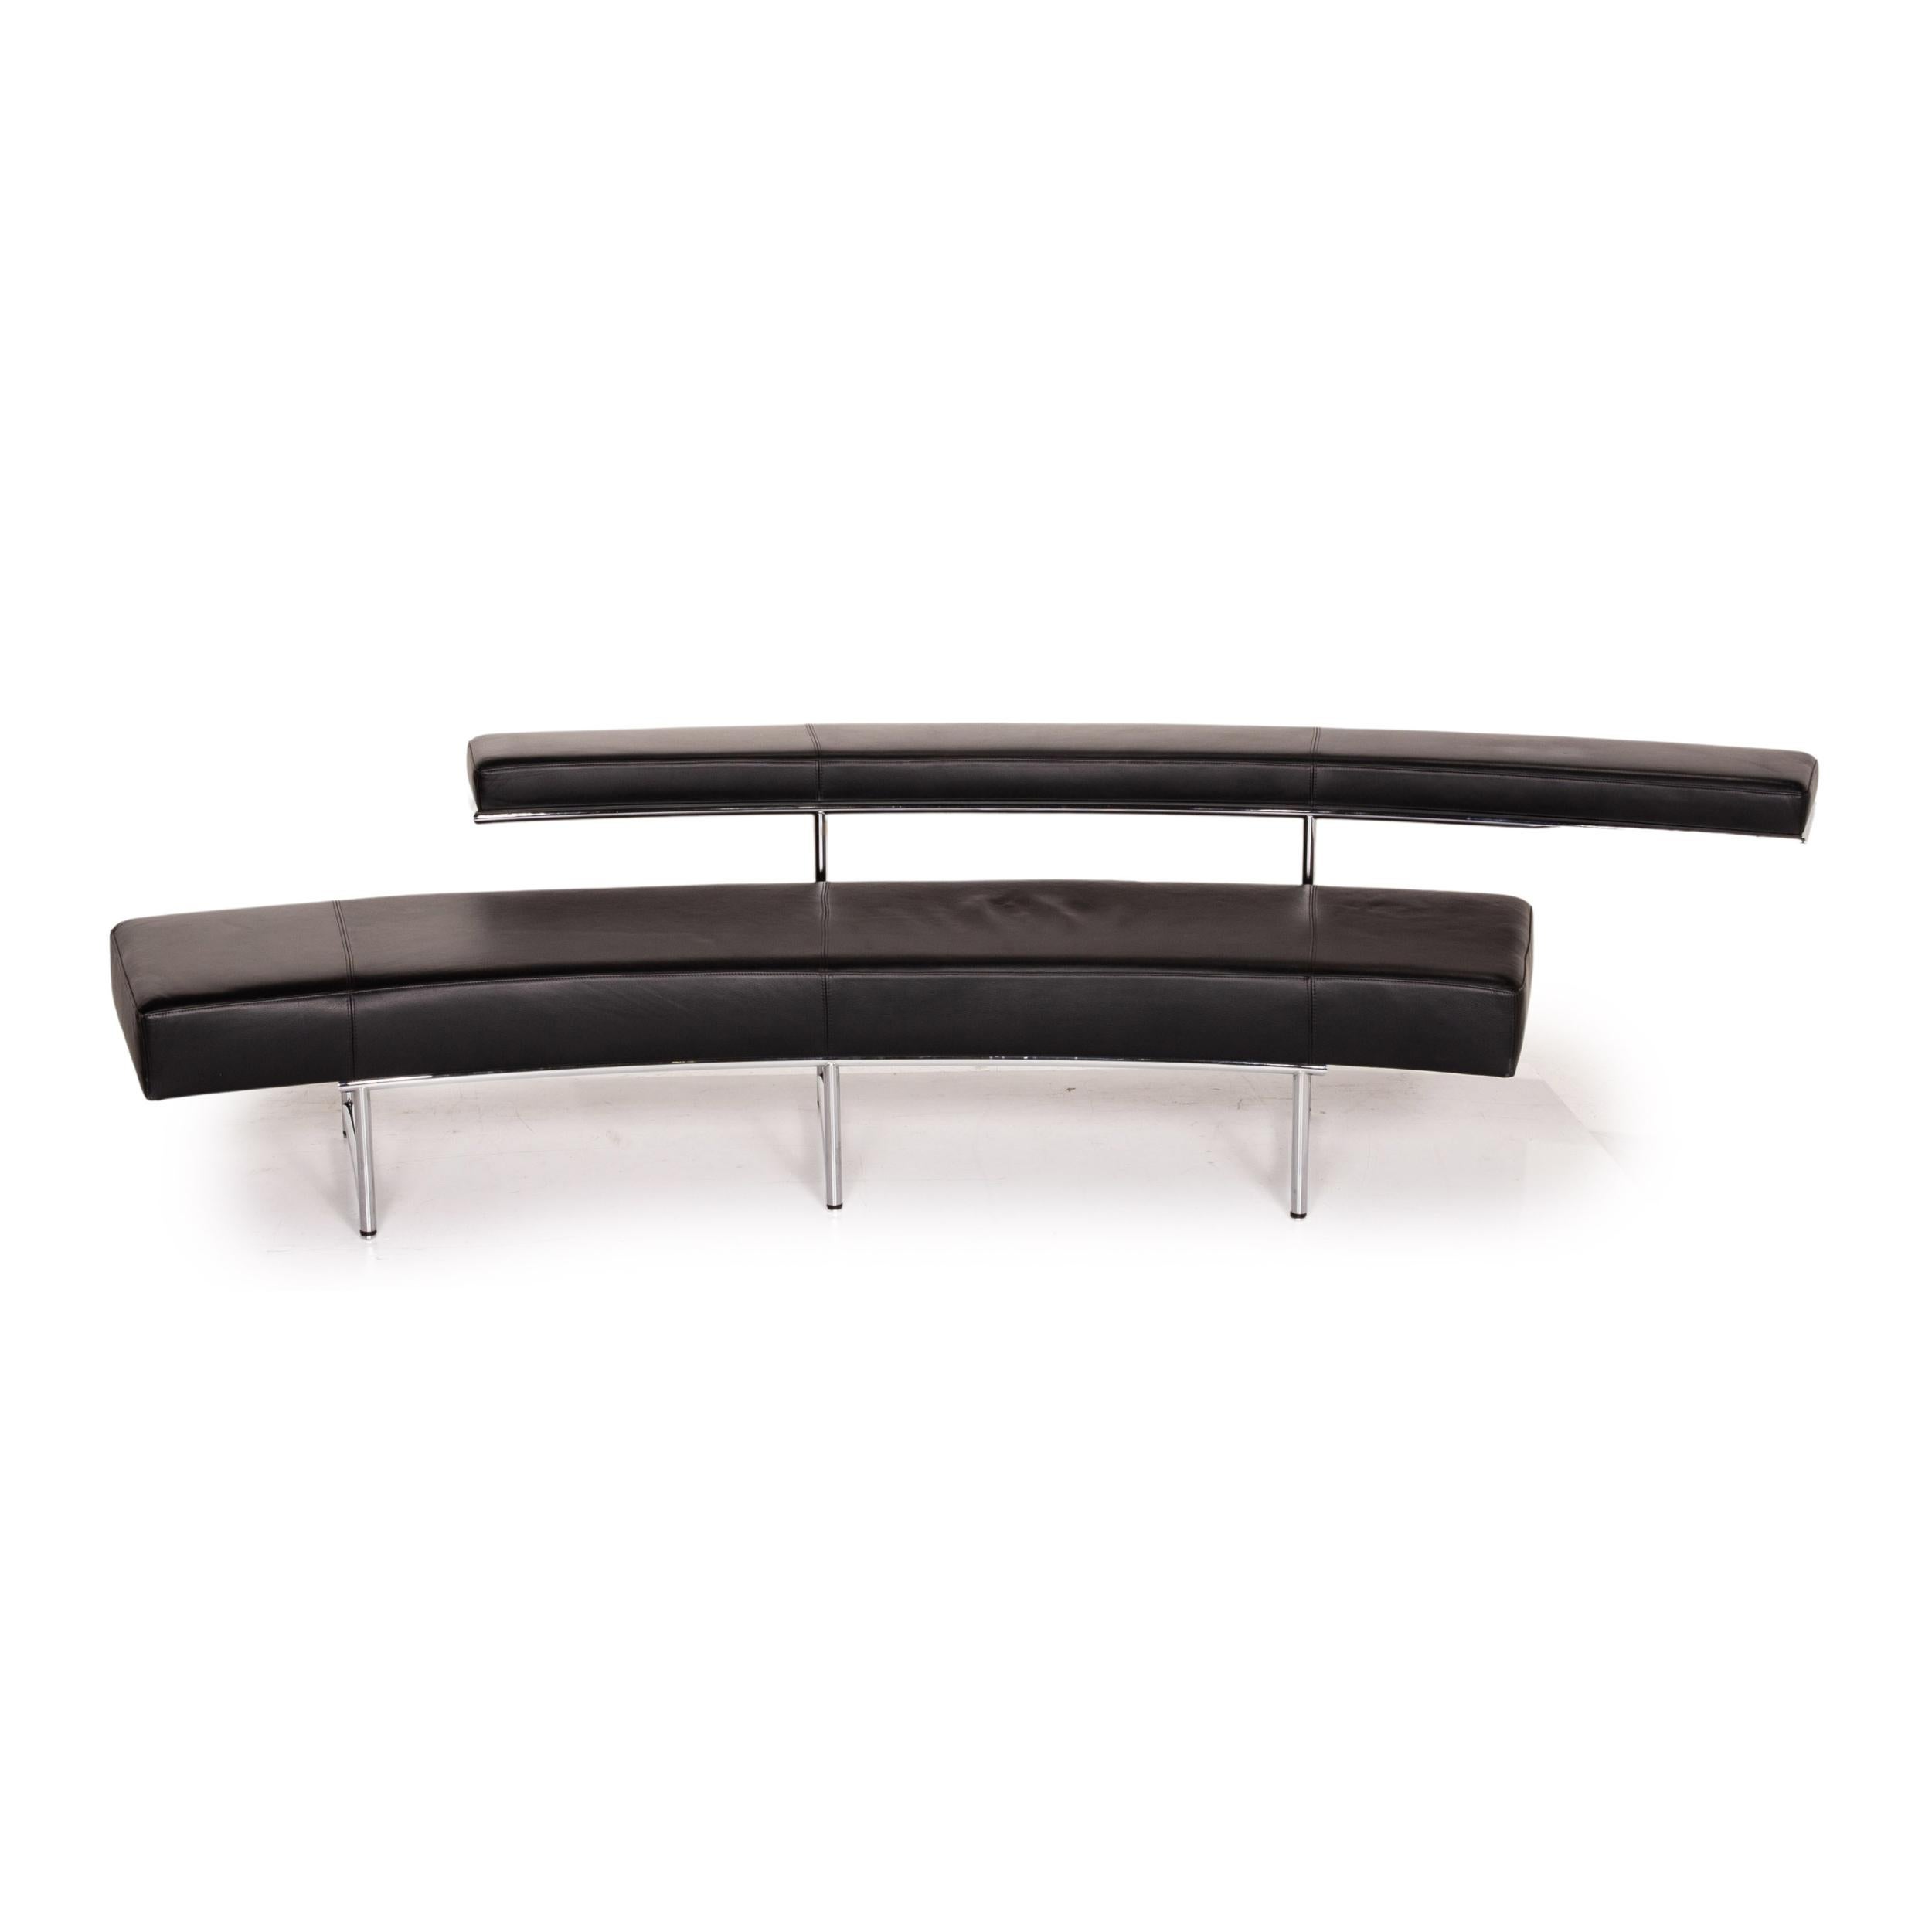 ClassiCon Monte Carlo Leather Sofas Black Four-Seat Couch 2